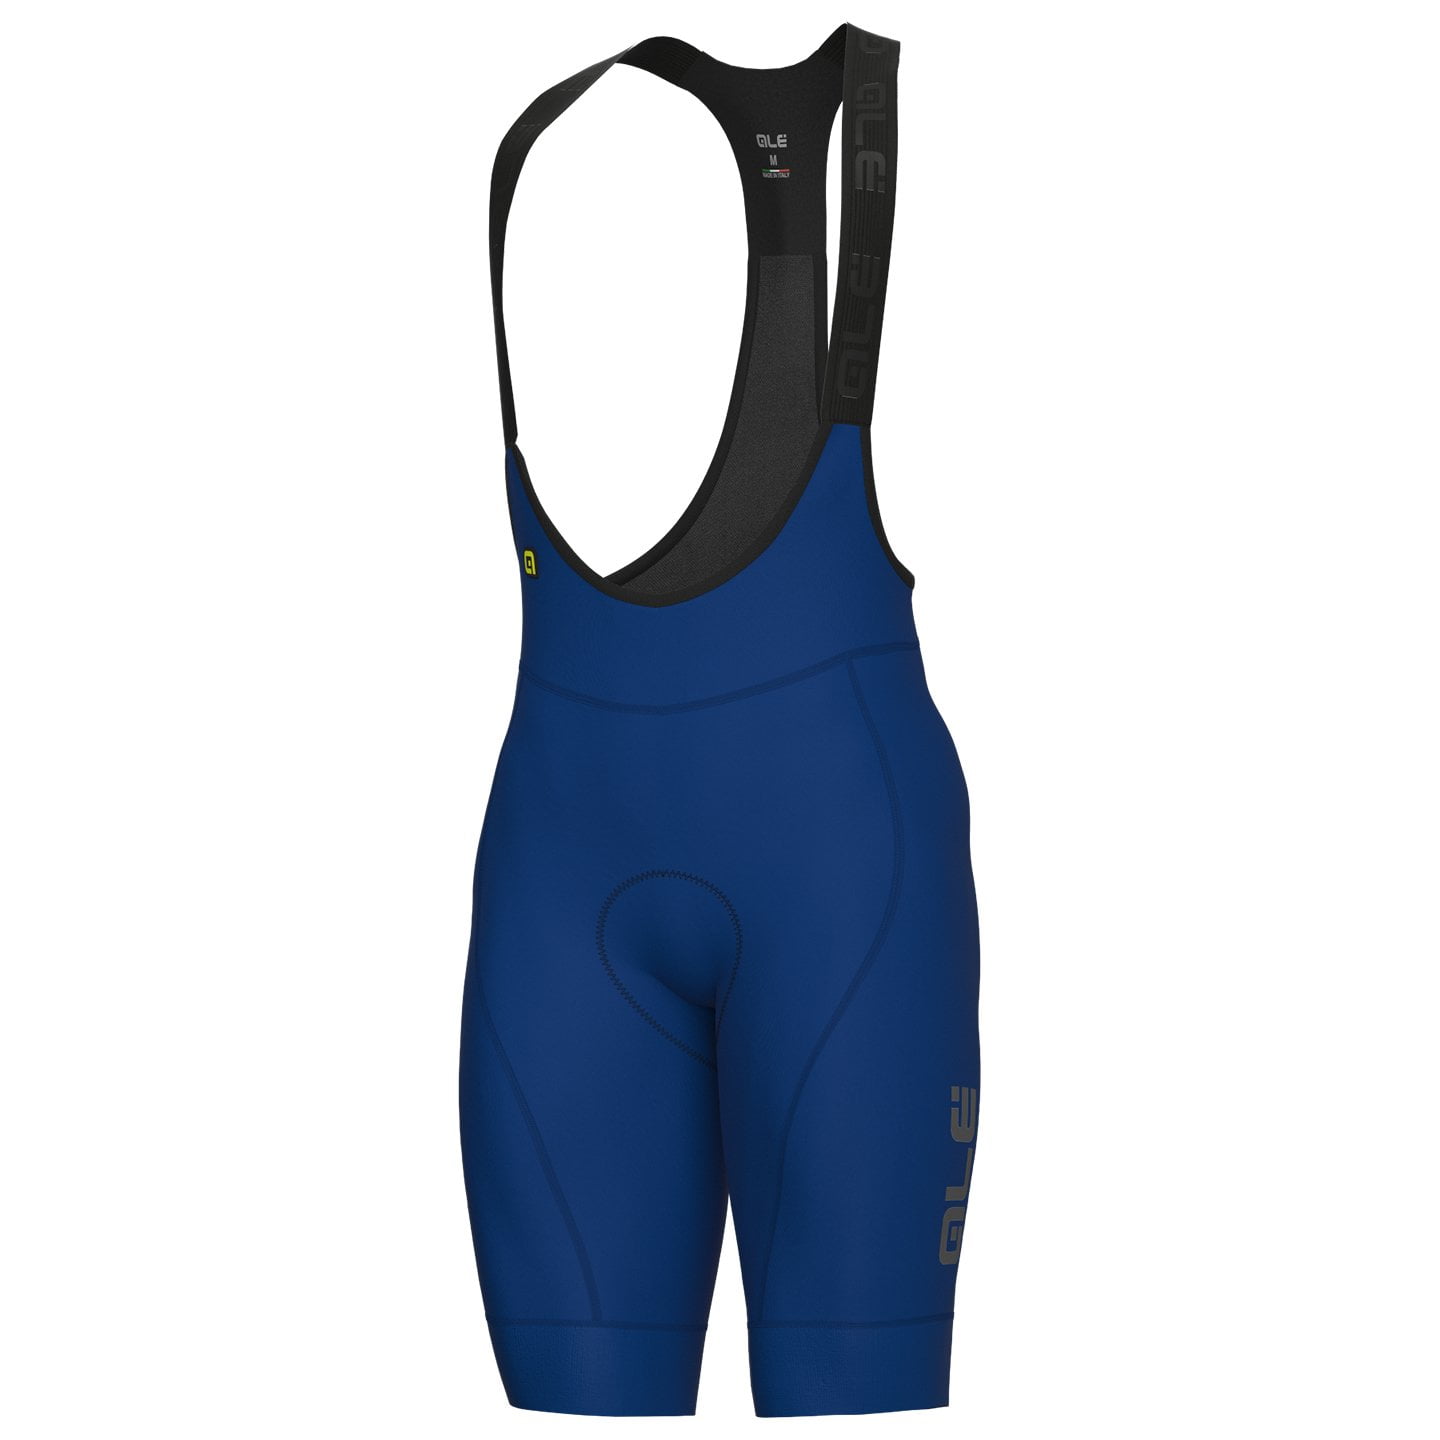 ALE Magic Colour Bib Shorts Bib Shorts, for men, size XL, Cycle shorts, Cycling clothing